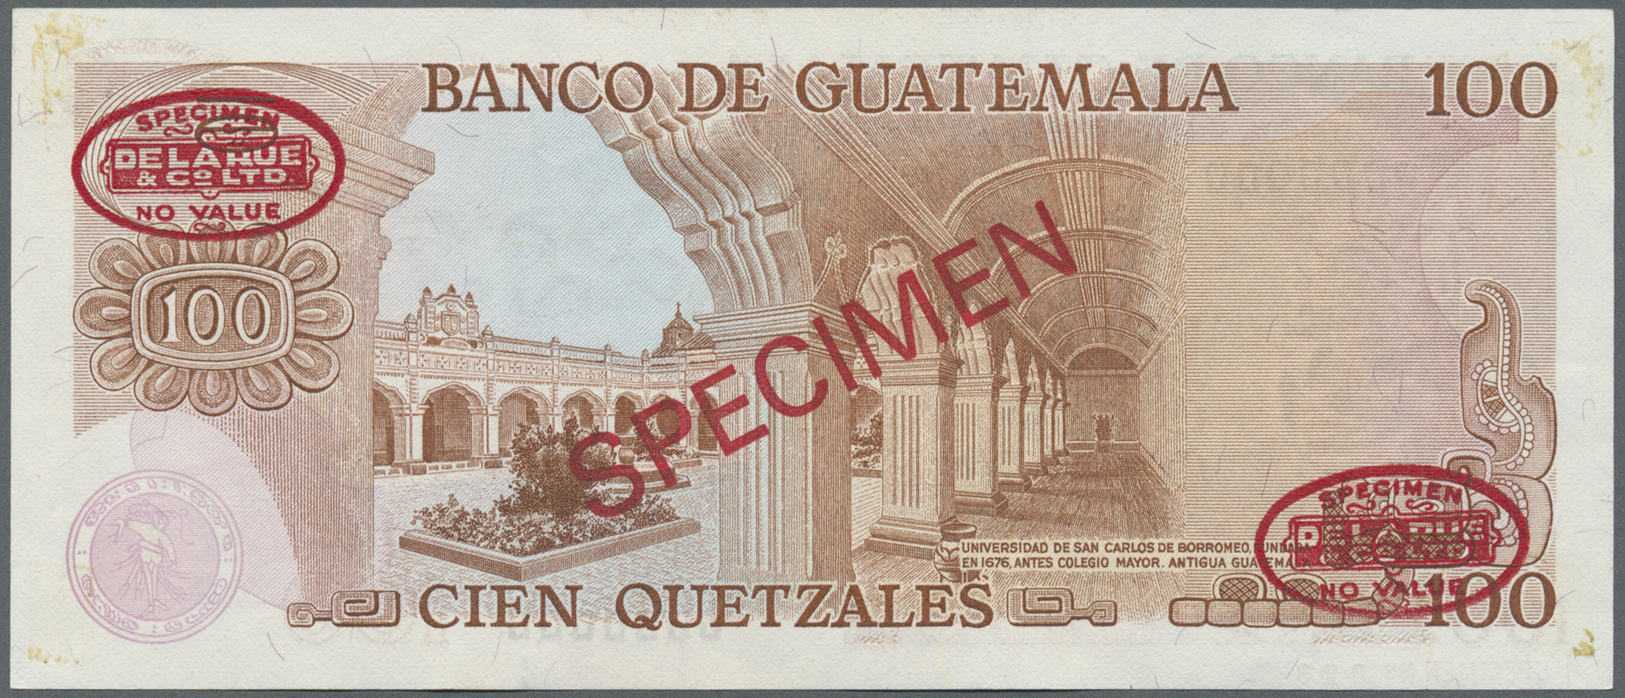 00968 Guatemala: Banco De Guatemala 100 Quetzales 1972-83 TDLR Specimen, P.64s, Traces Of Glue On Back, Otherwise Perfec - Guatemala